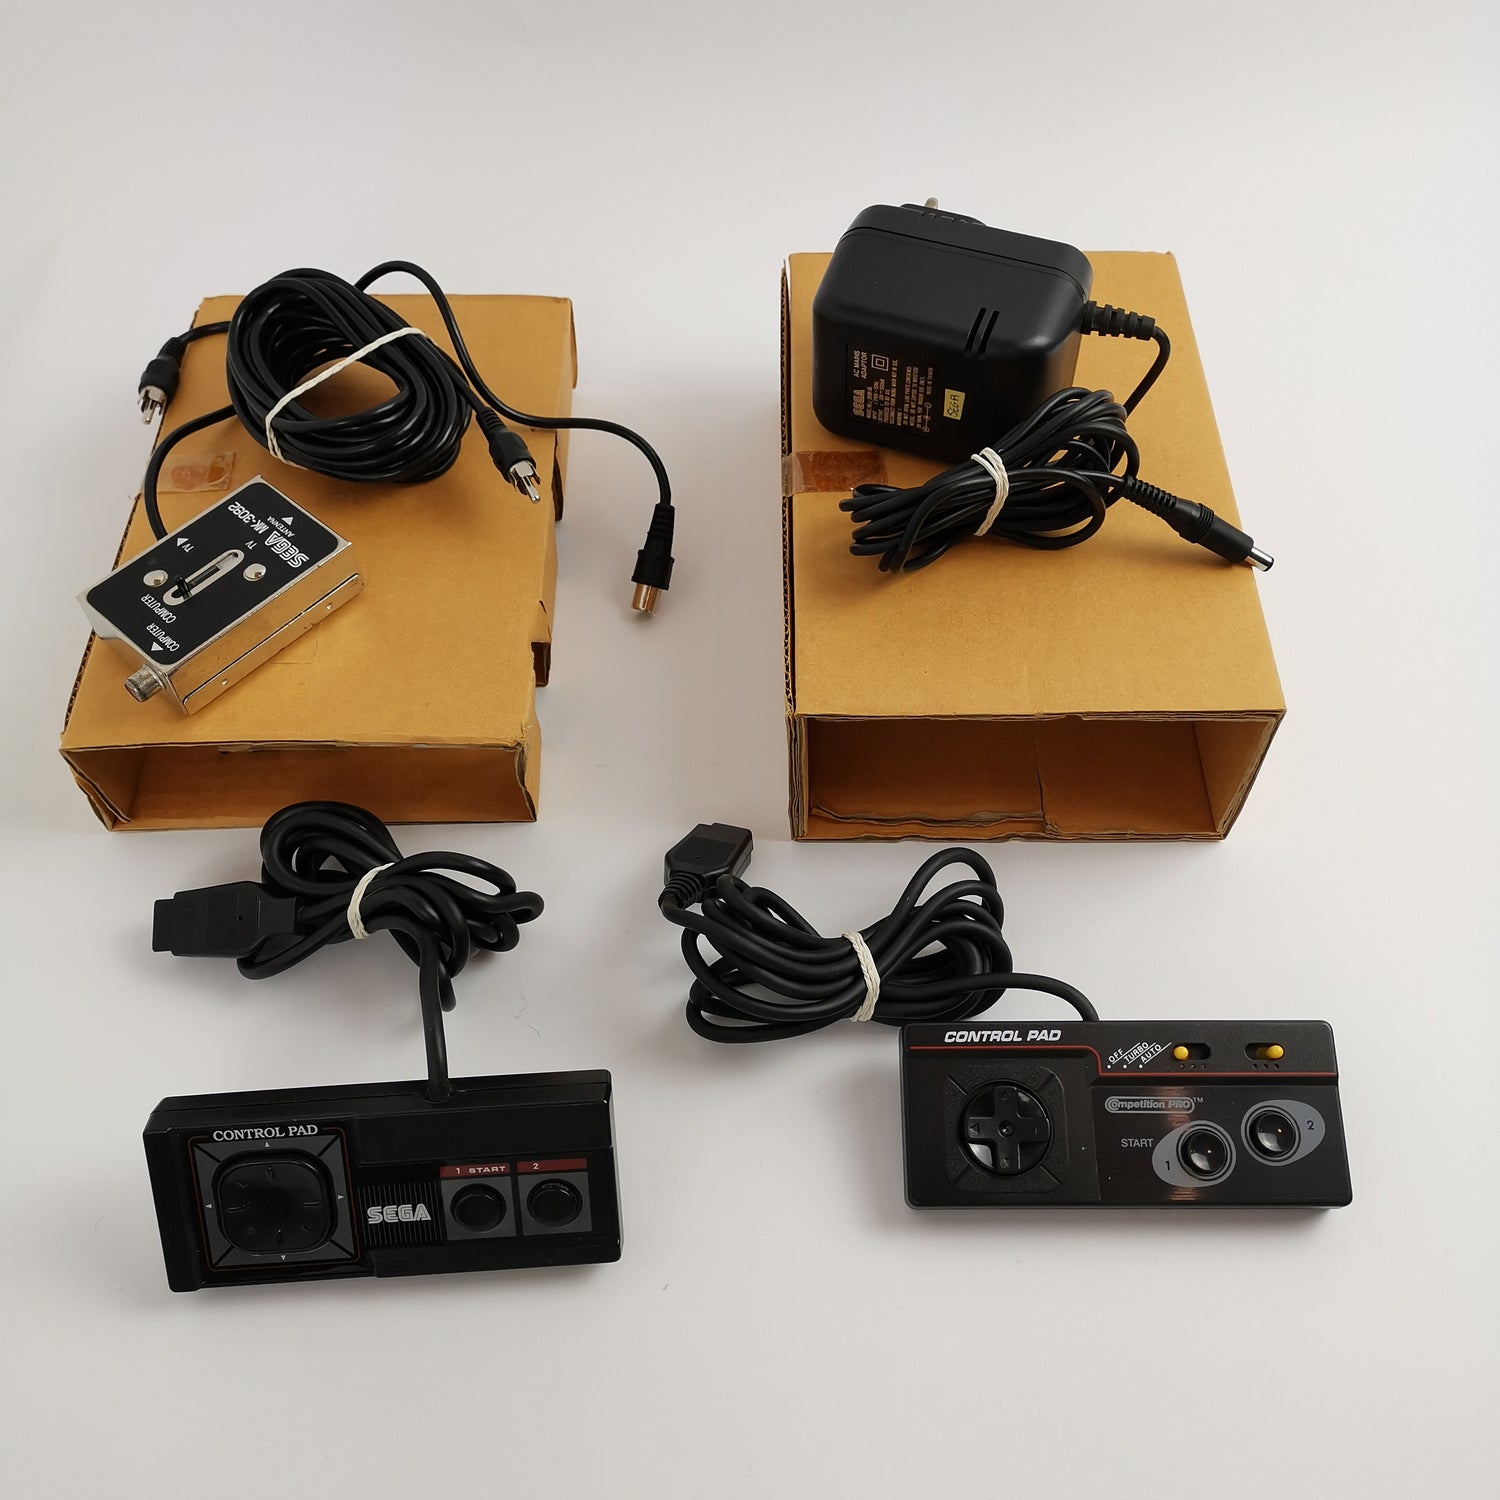 Sega Master System II 2 Console Alex Kidd | PAL Console - original packaging